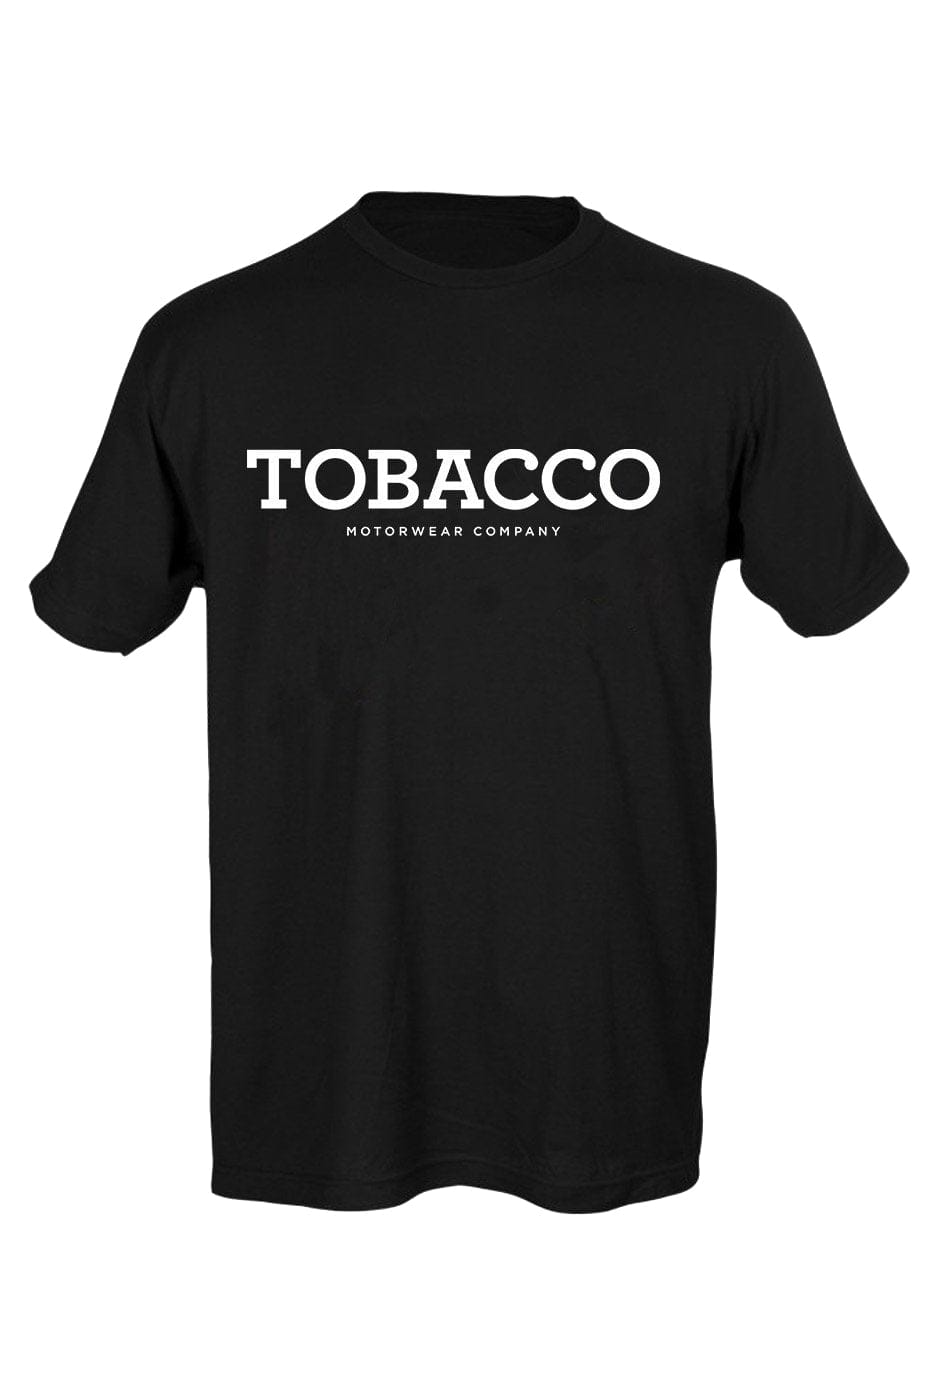 Tobacco Logo - Black